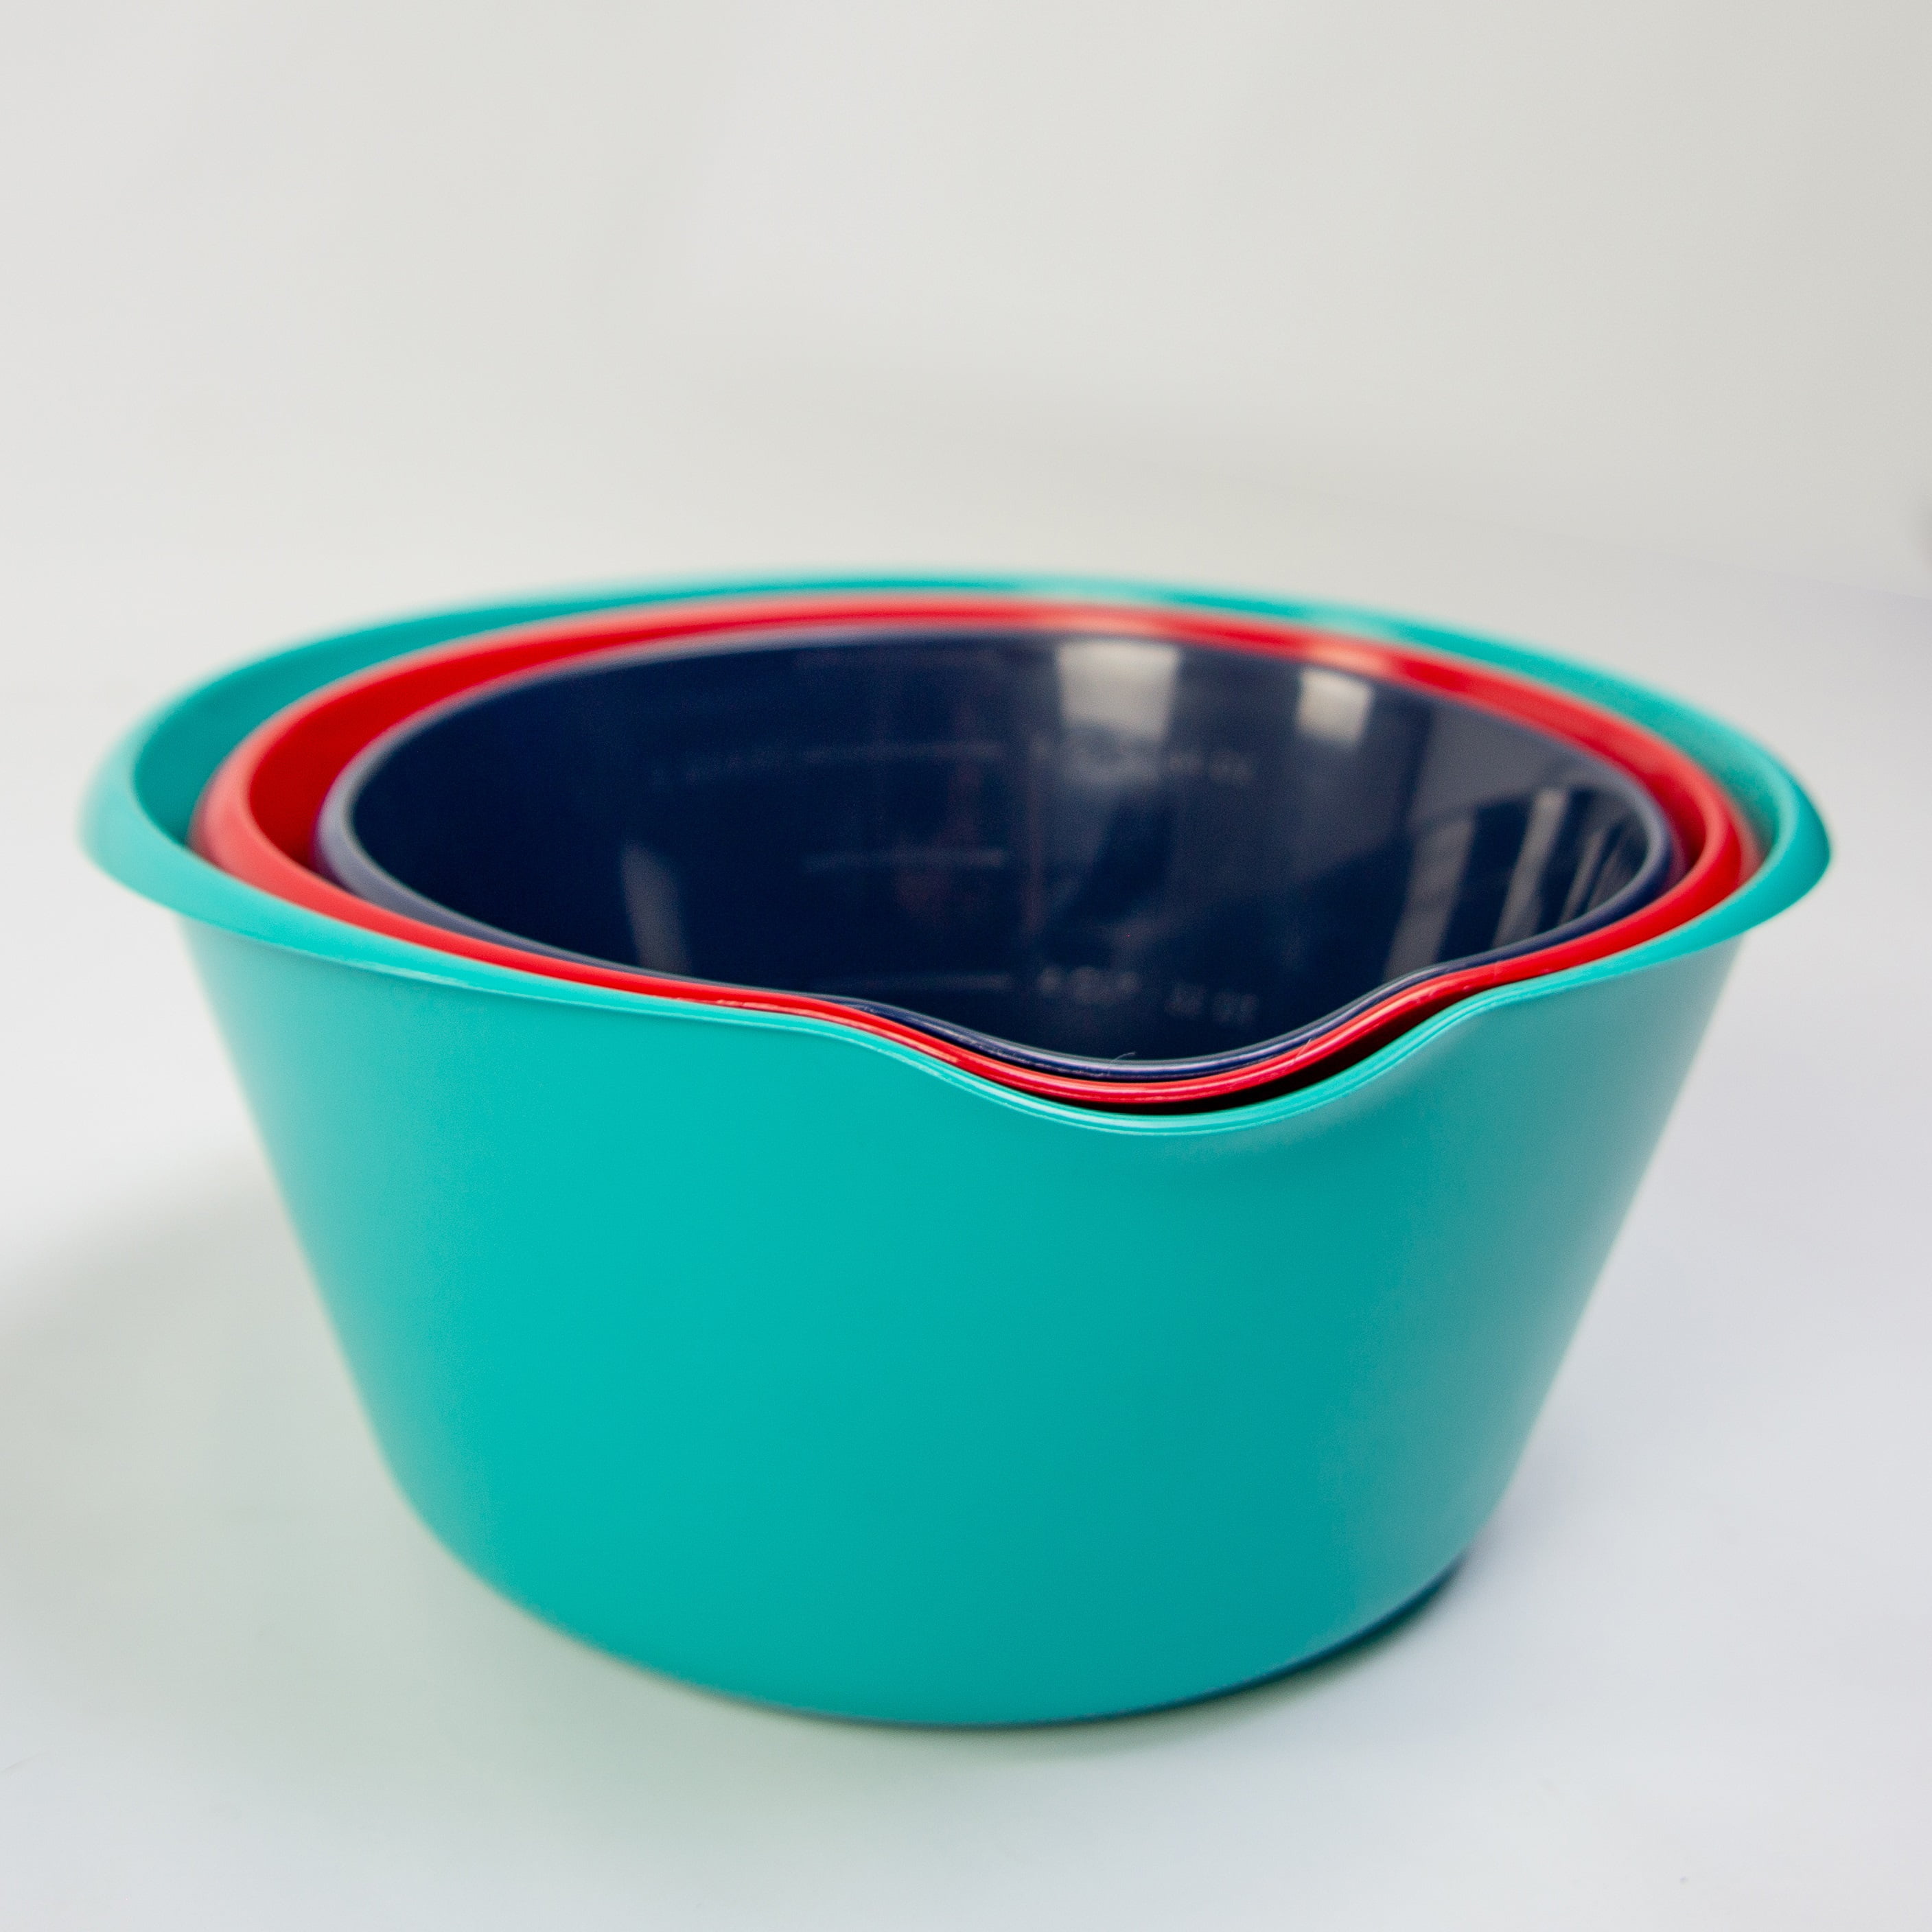 Mainstays 3-Piece Mixing Bowl Set, Assorted Colors, 2.5, 3.5 and 5-Quart, Polypropylene